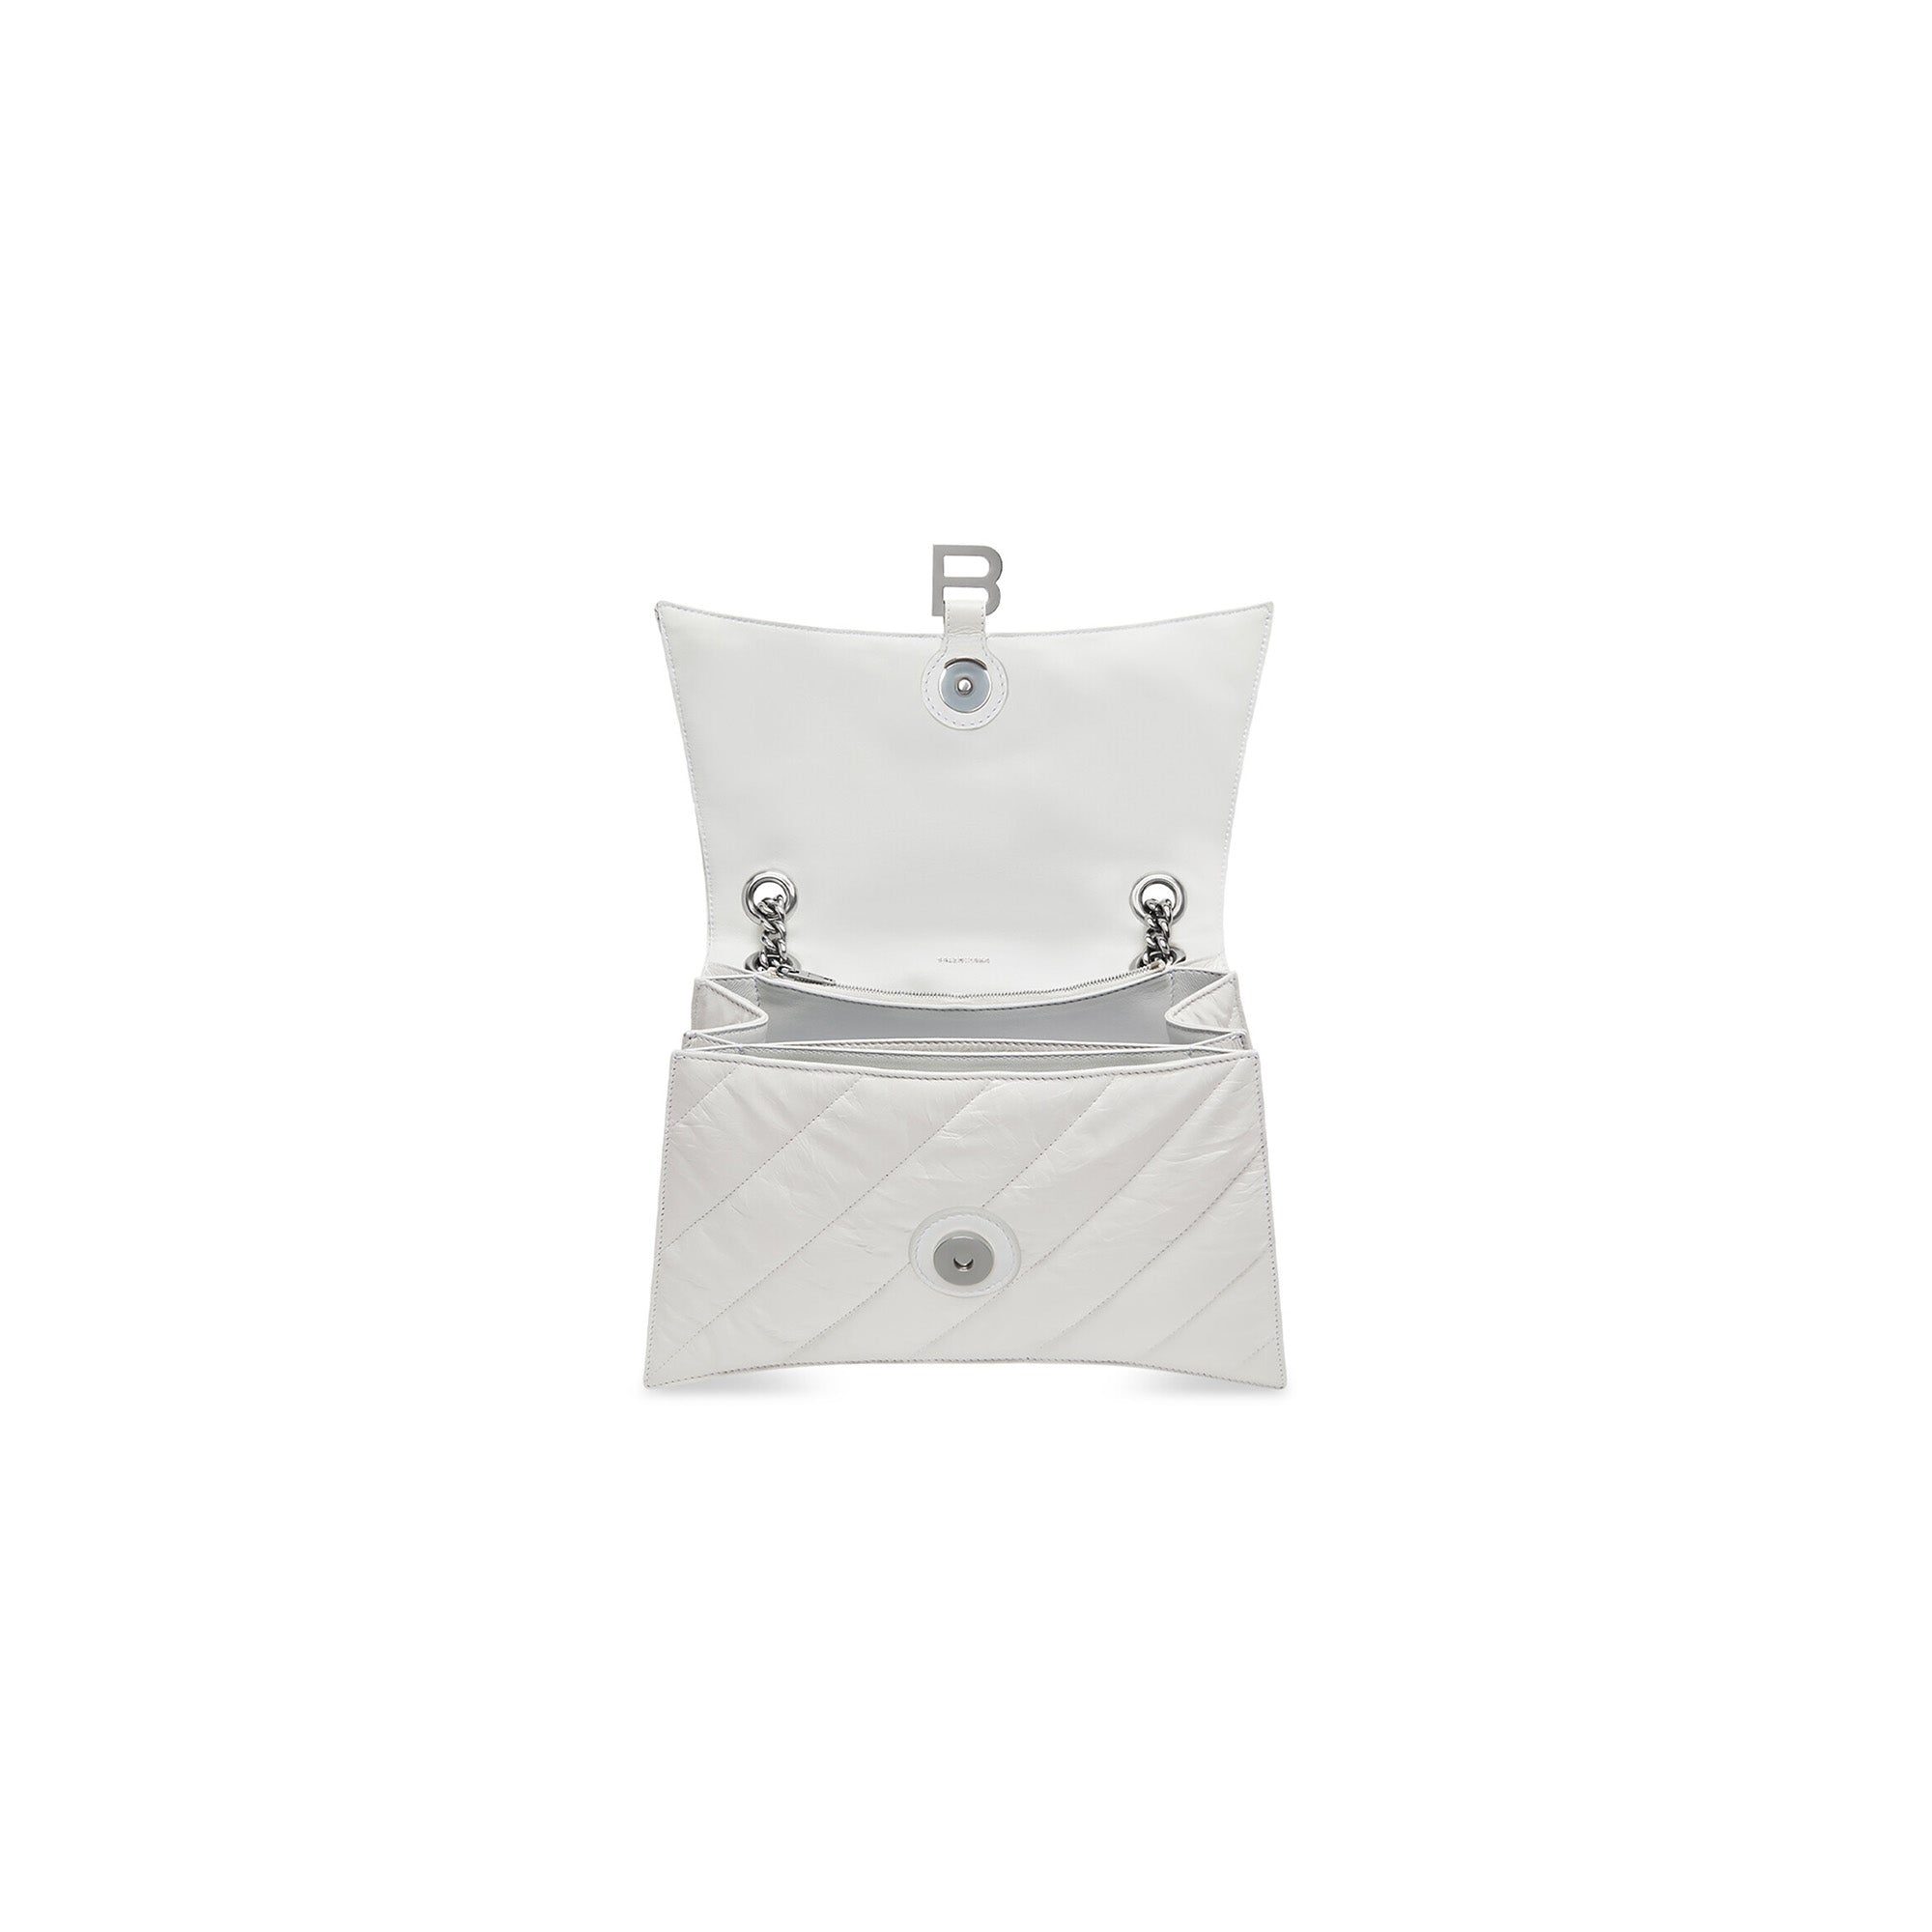 Balenciaga - Women’s Crush Quilted Chain Medium Bag - (Optic White) view 5